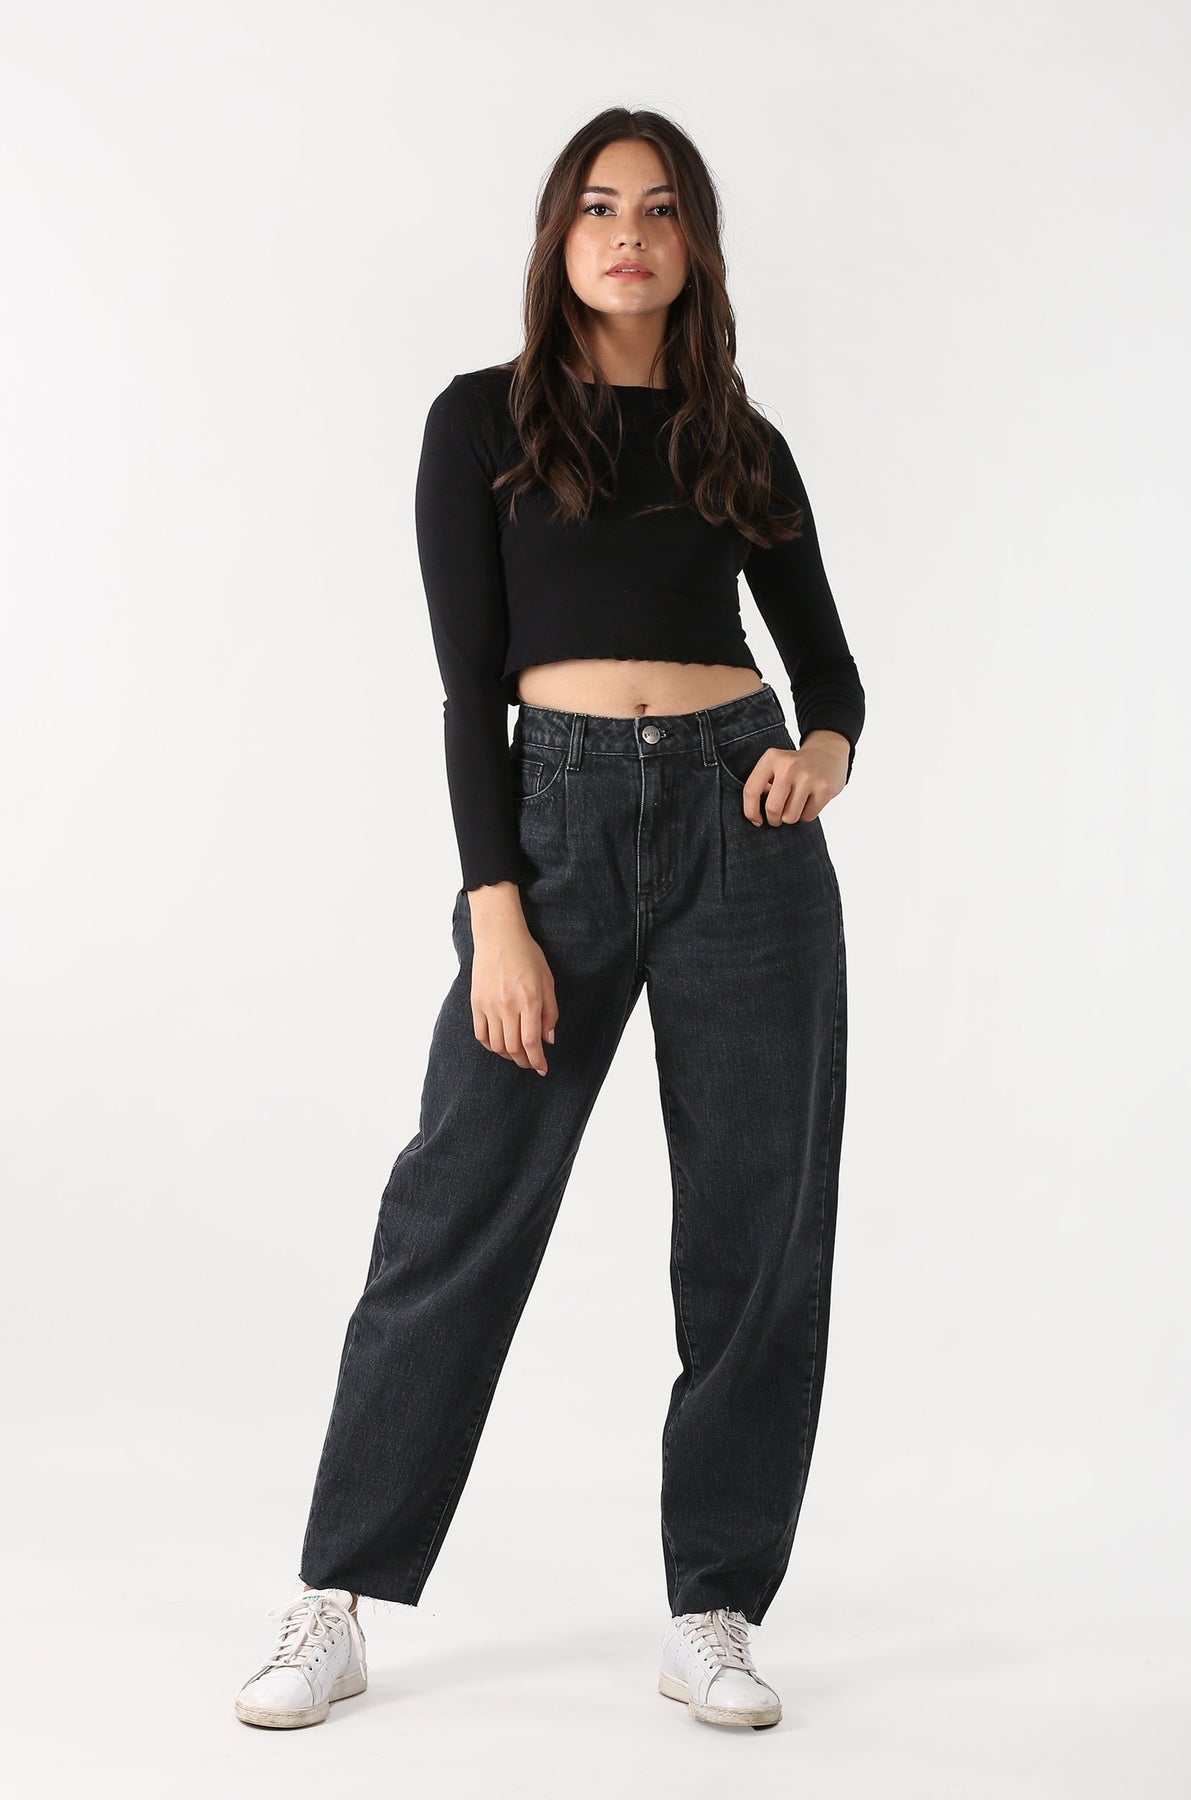 Shop Women's Sia Black Slouchy Jeans – Genie.pk